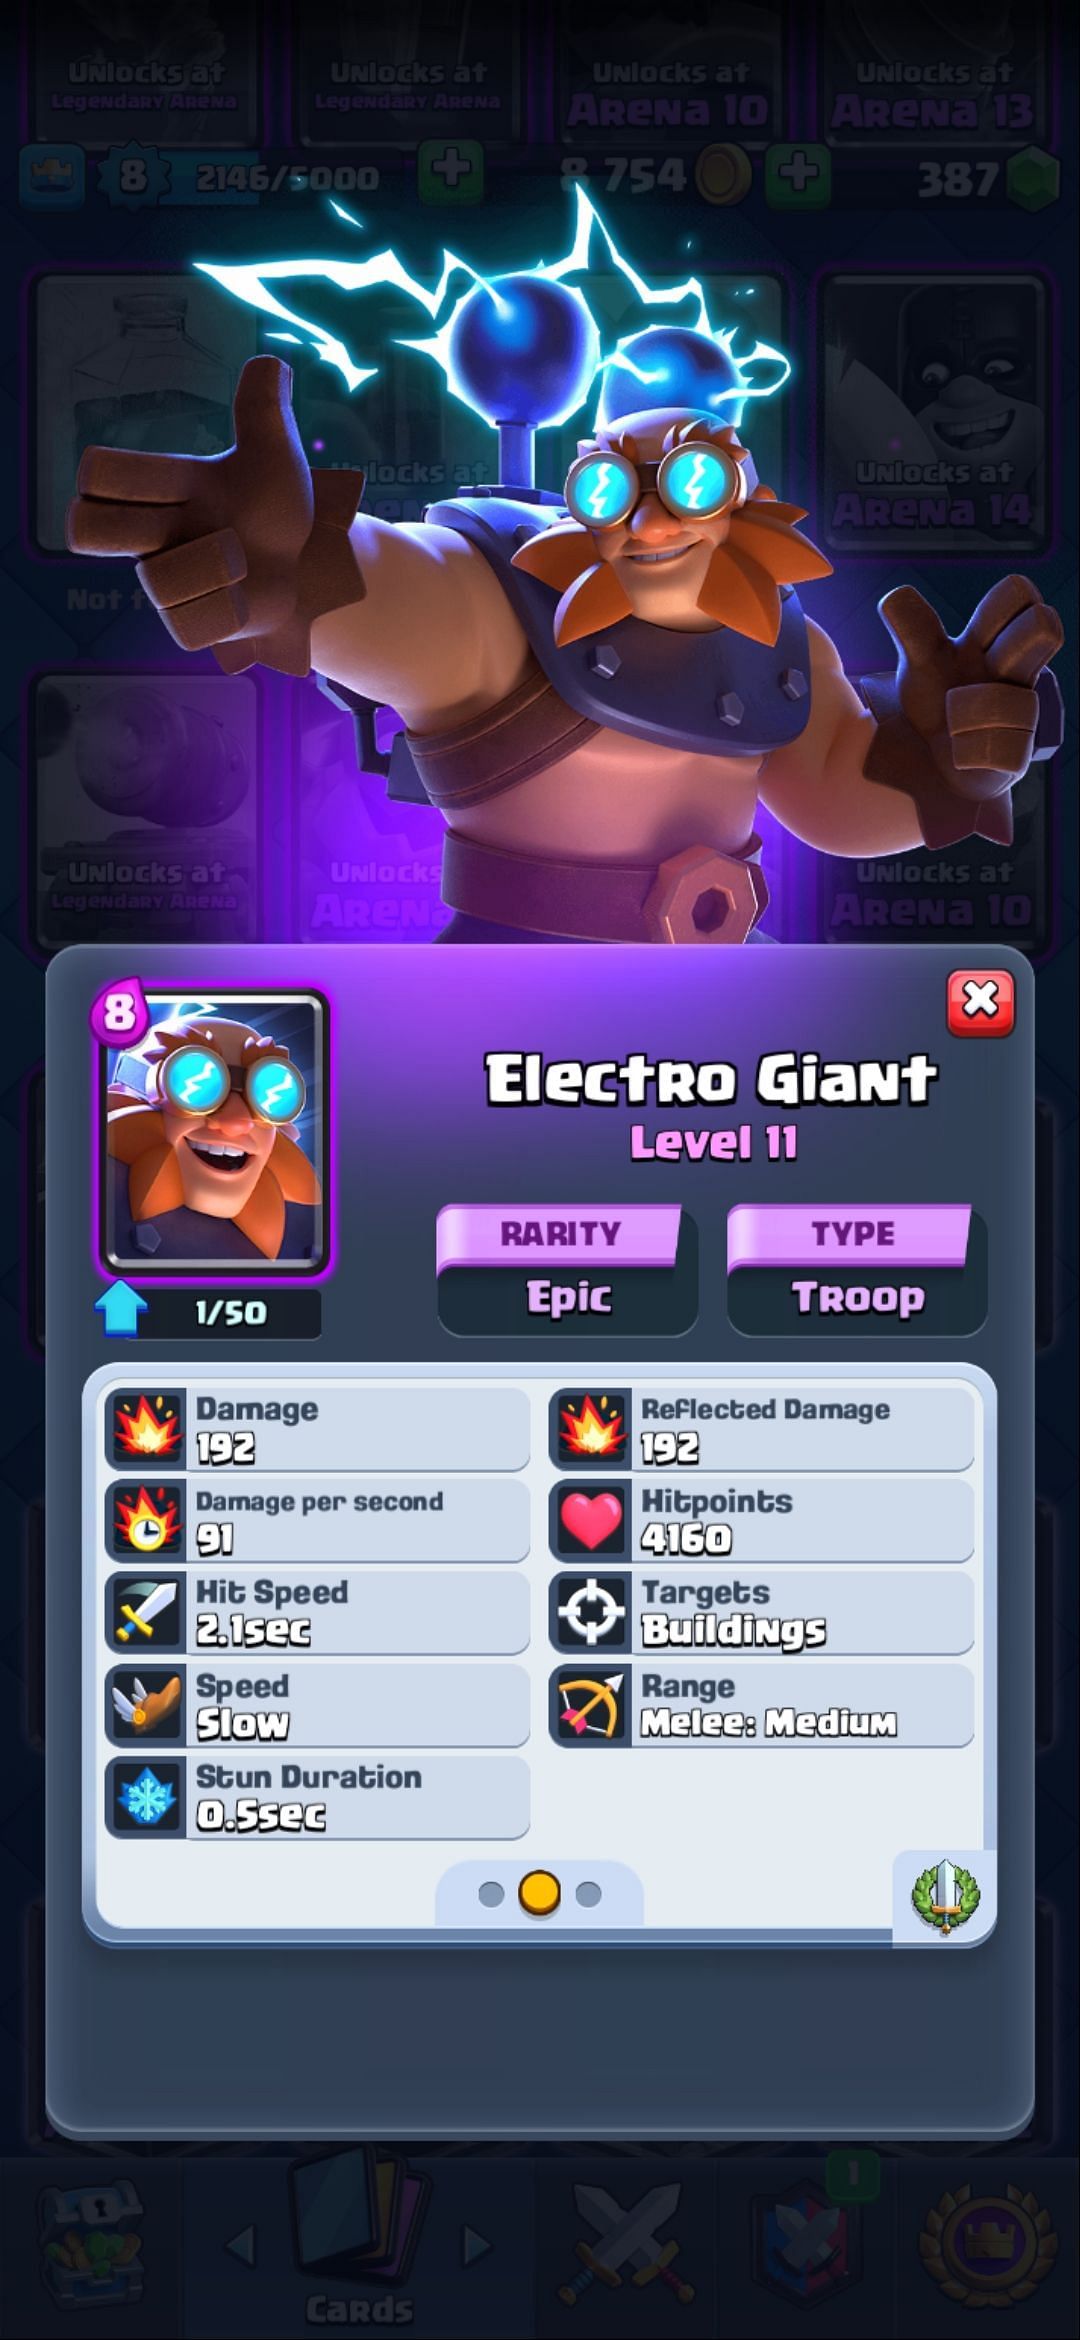 The Electro Giant in Clash Royale (Image via Sportskeeda)